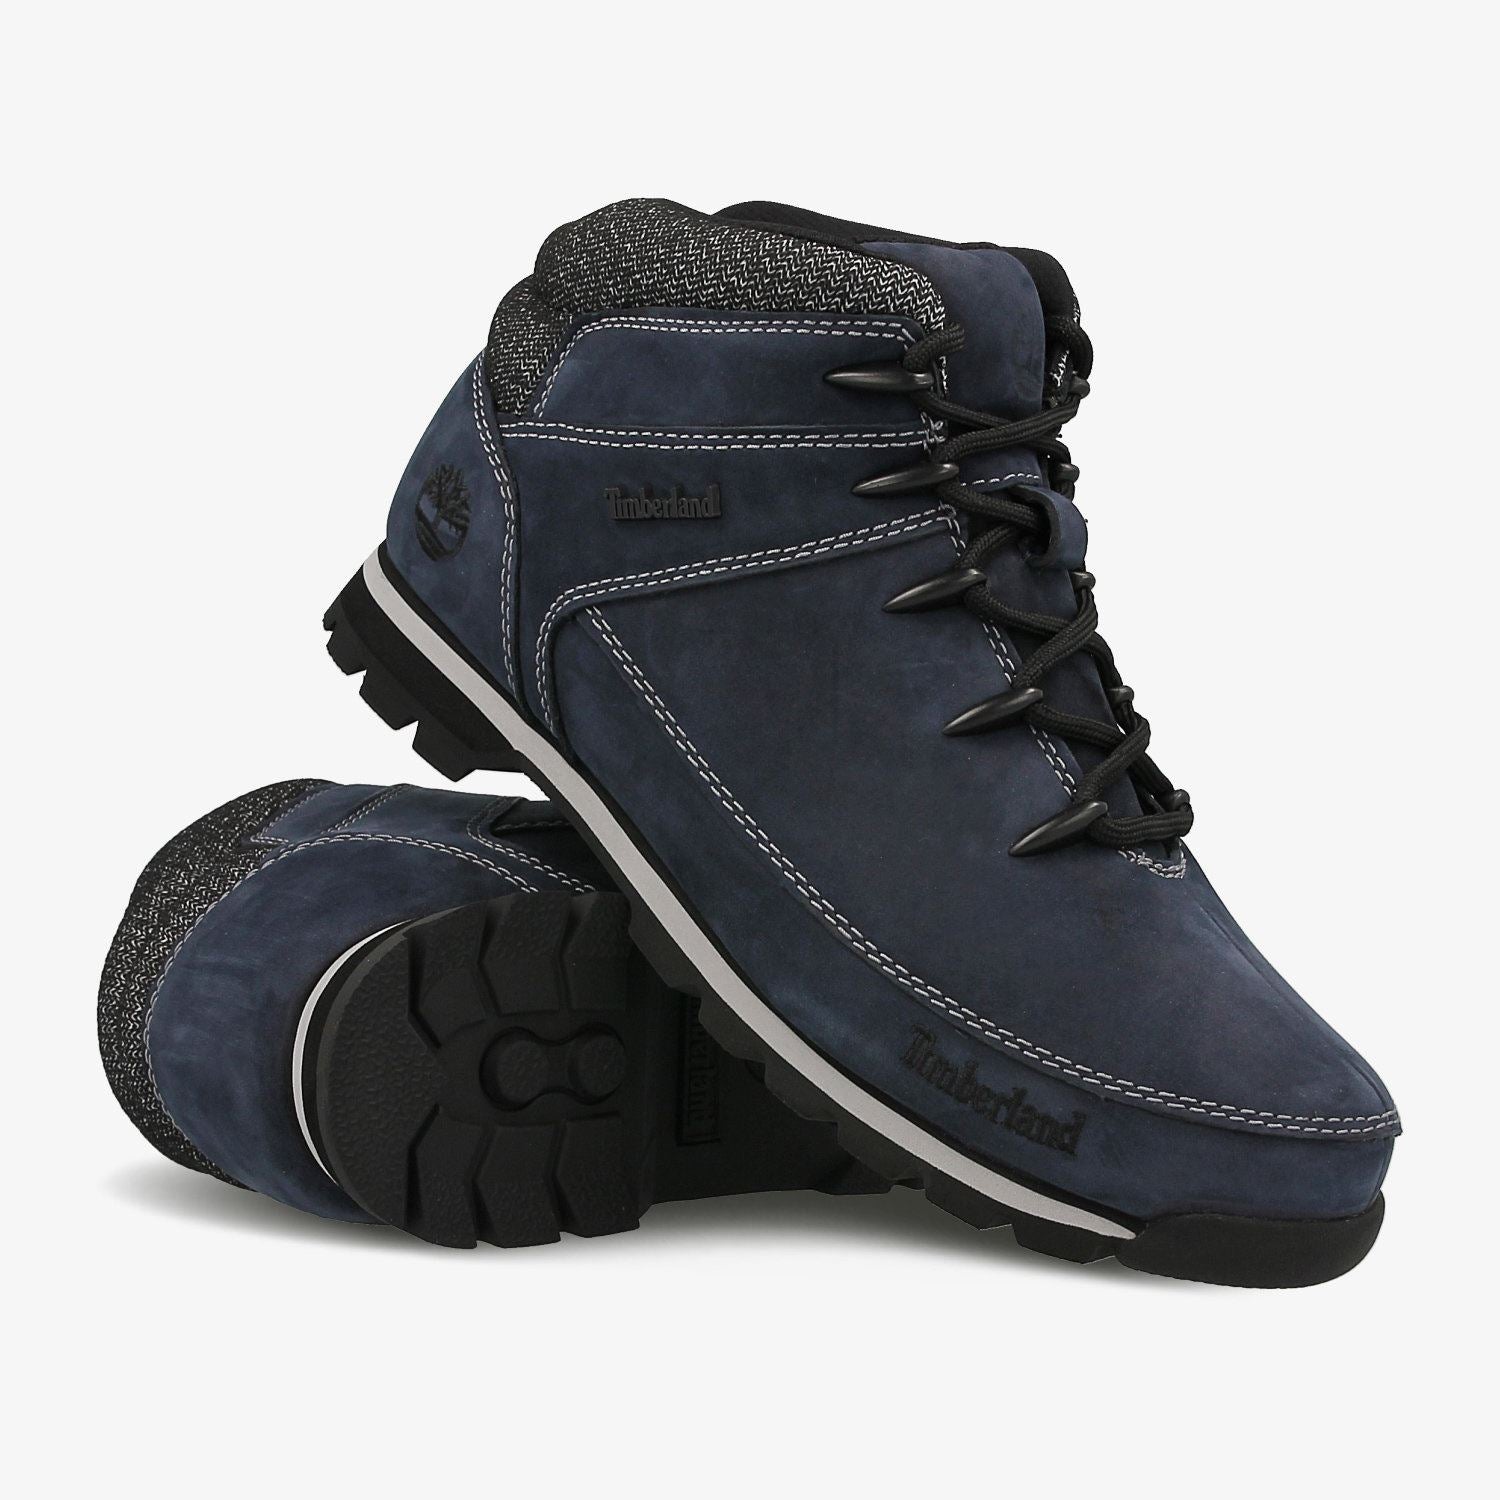 timberland euro hiker boots blue